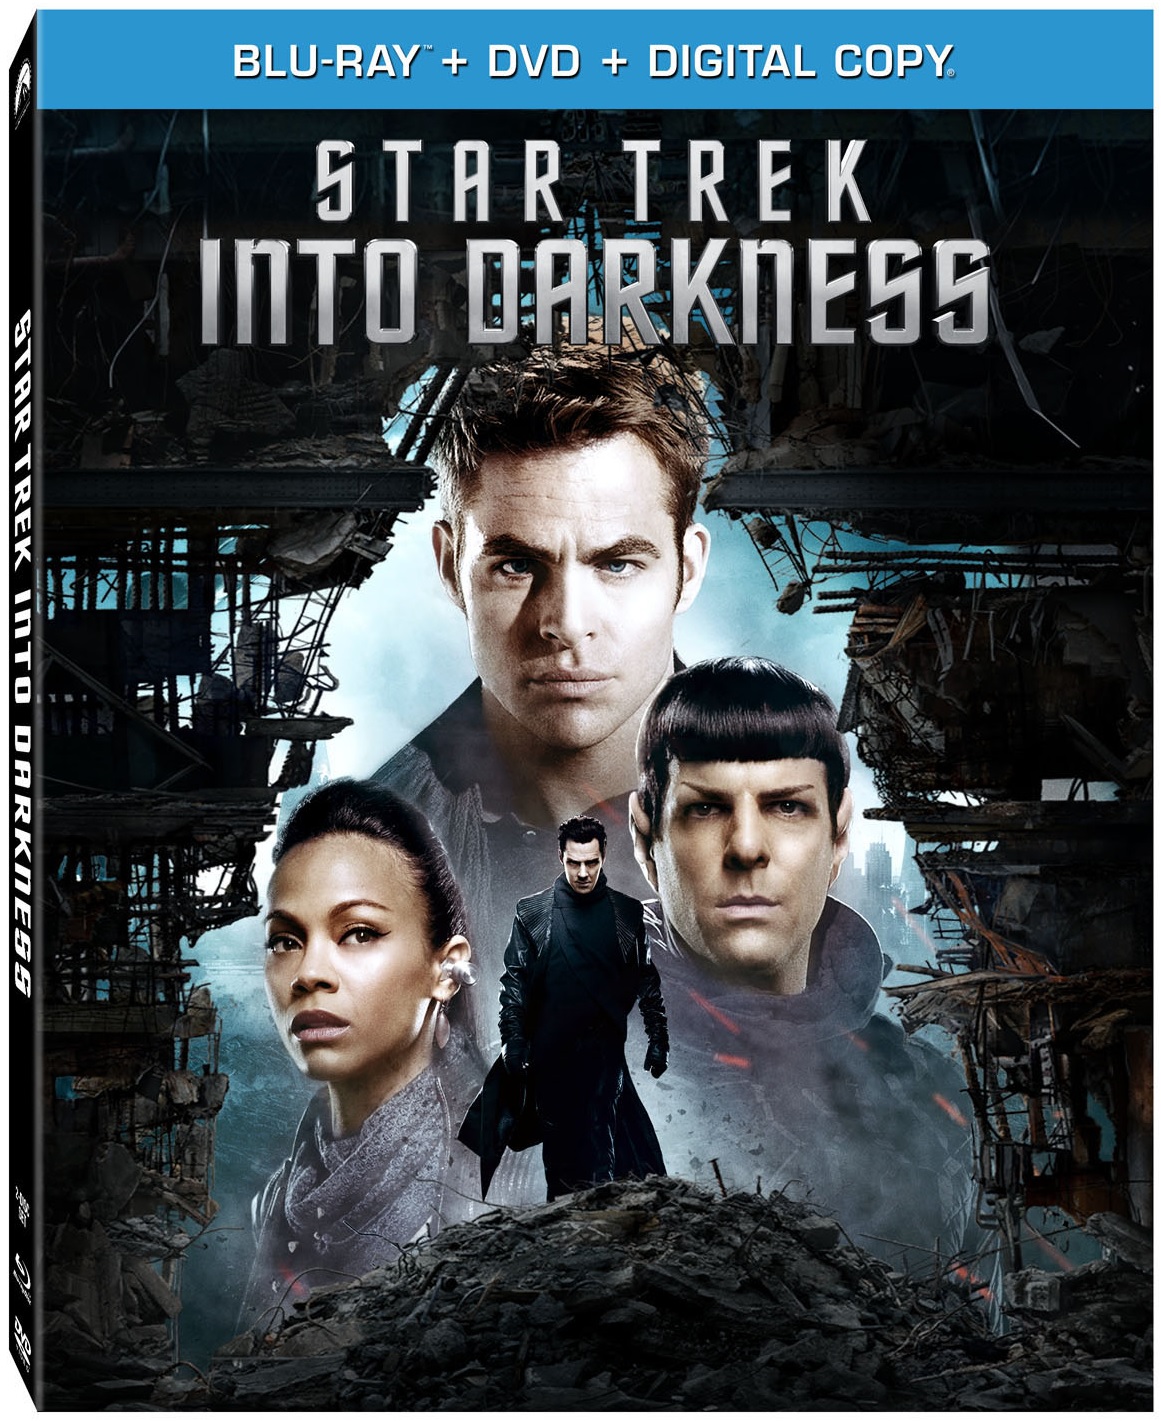 Star Trek Into Darkness Blu-ray